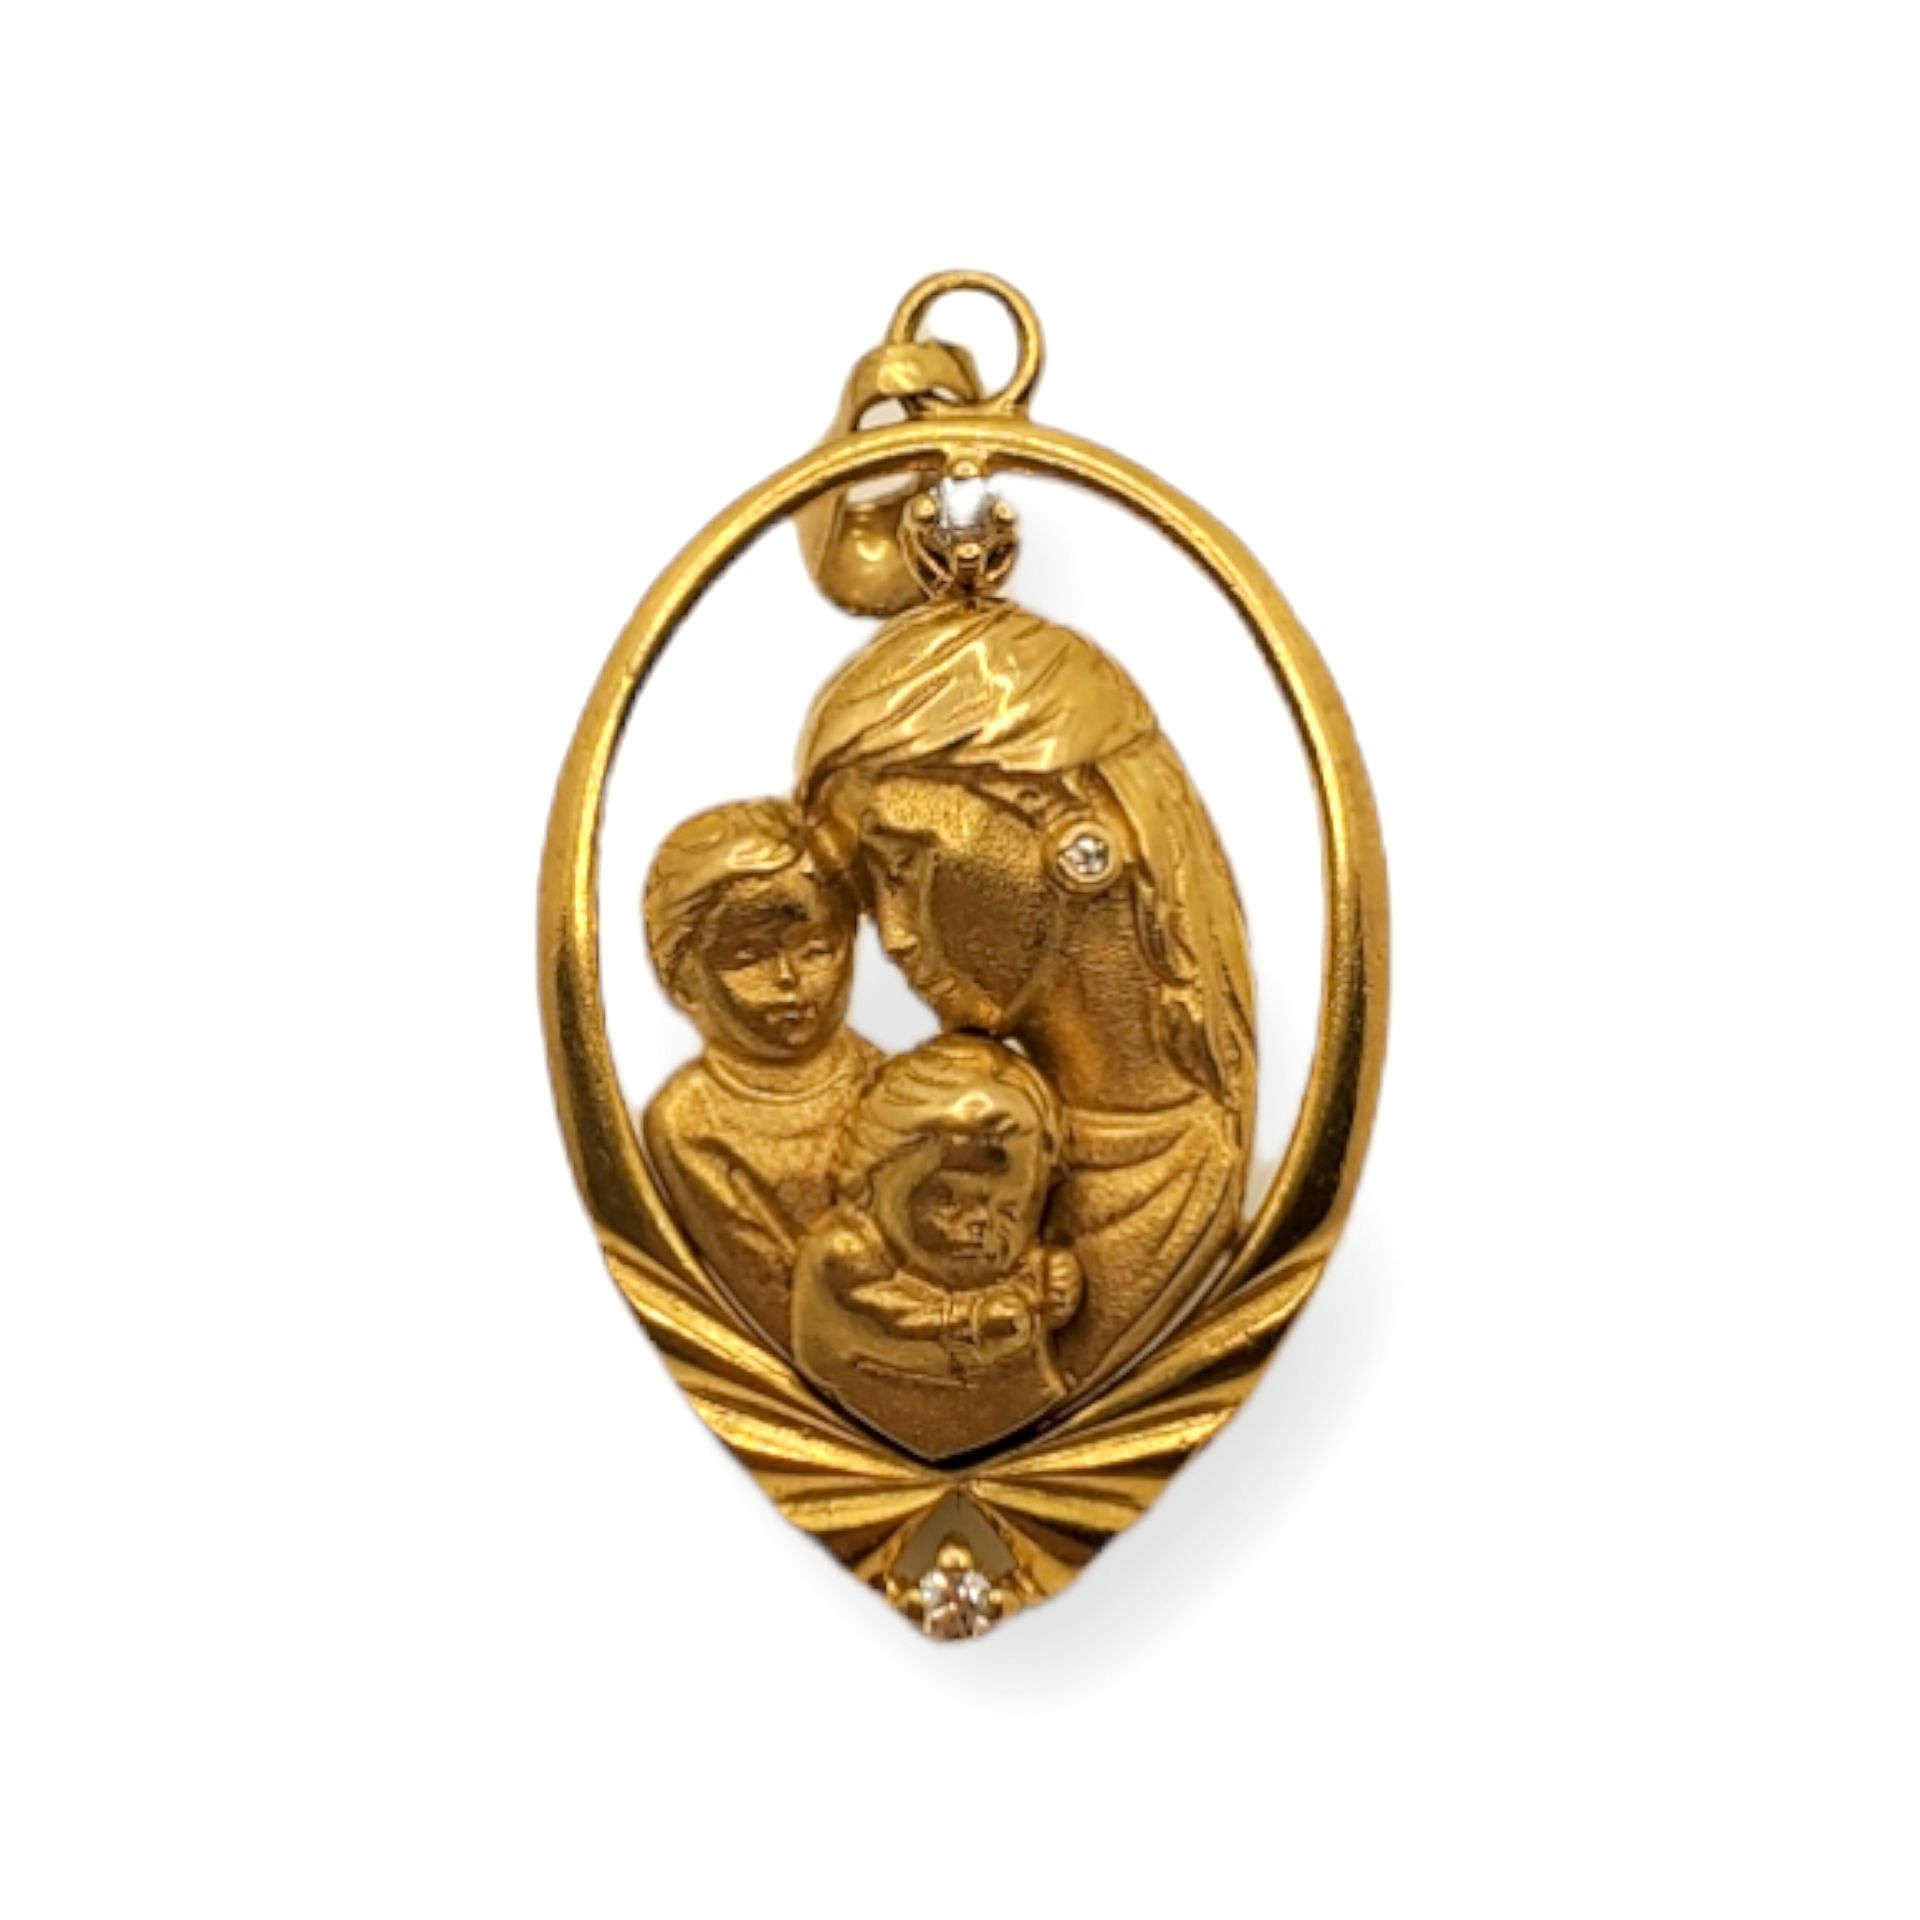 Medalla 18K金奖章，代表圣母与圣婴和圣胡安尼托，钻石为明亮式切割。

尺寸2,2x1,5cm。重量为3,4克